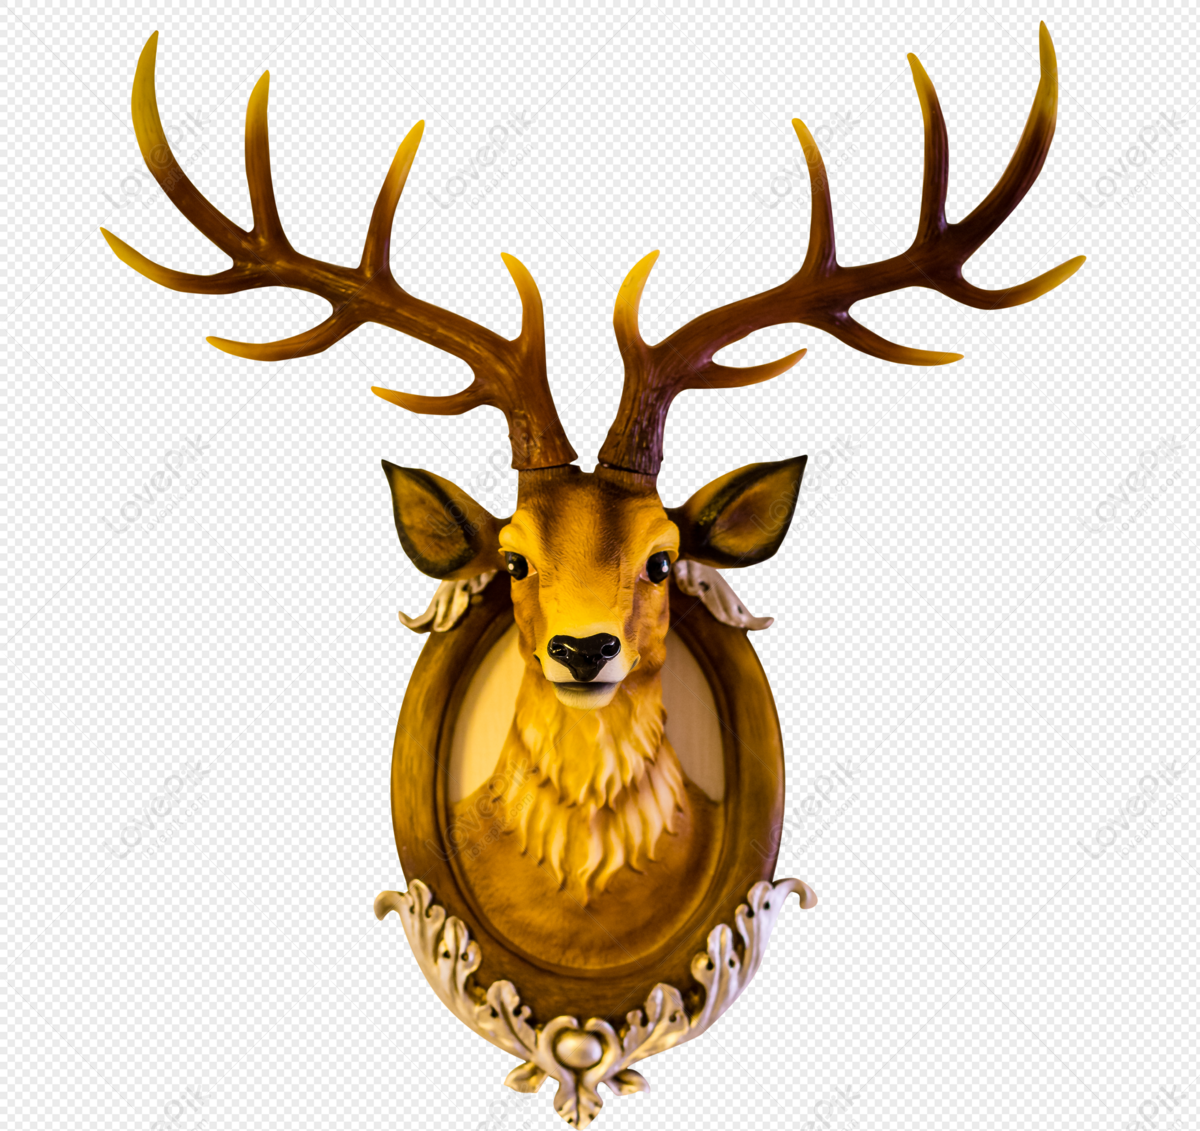 Deer Valley Logo Png Transparent - Deer Valley Resort Logo, Png Download -  2400x2400(#4238087) - PngFind